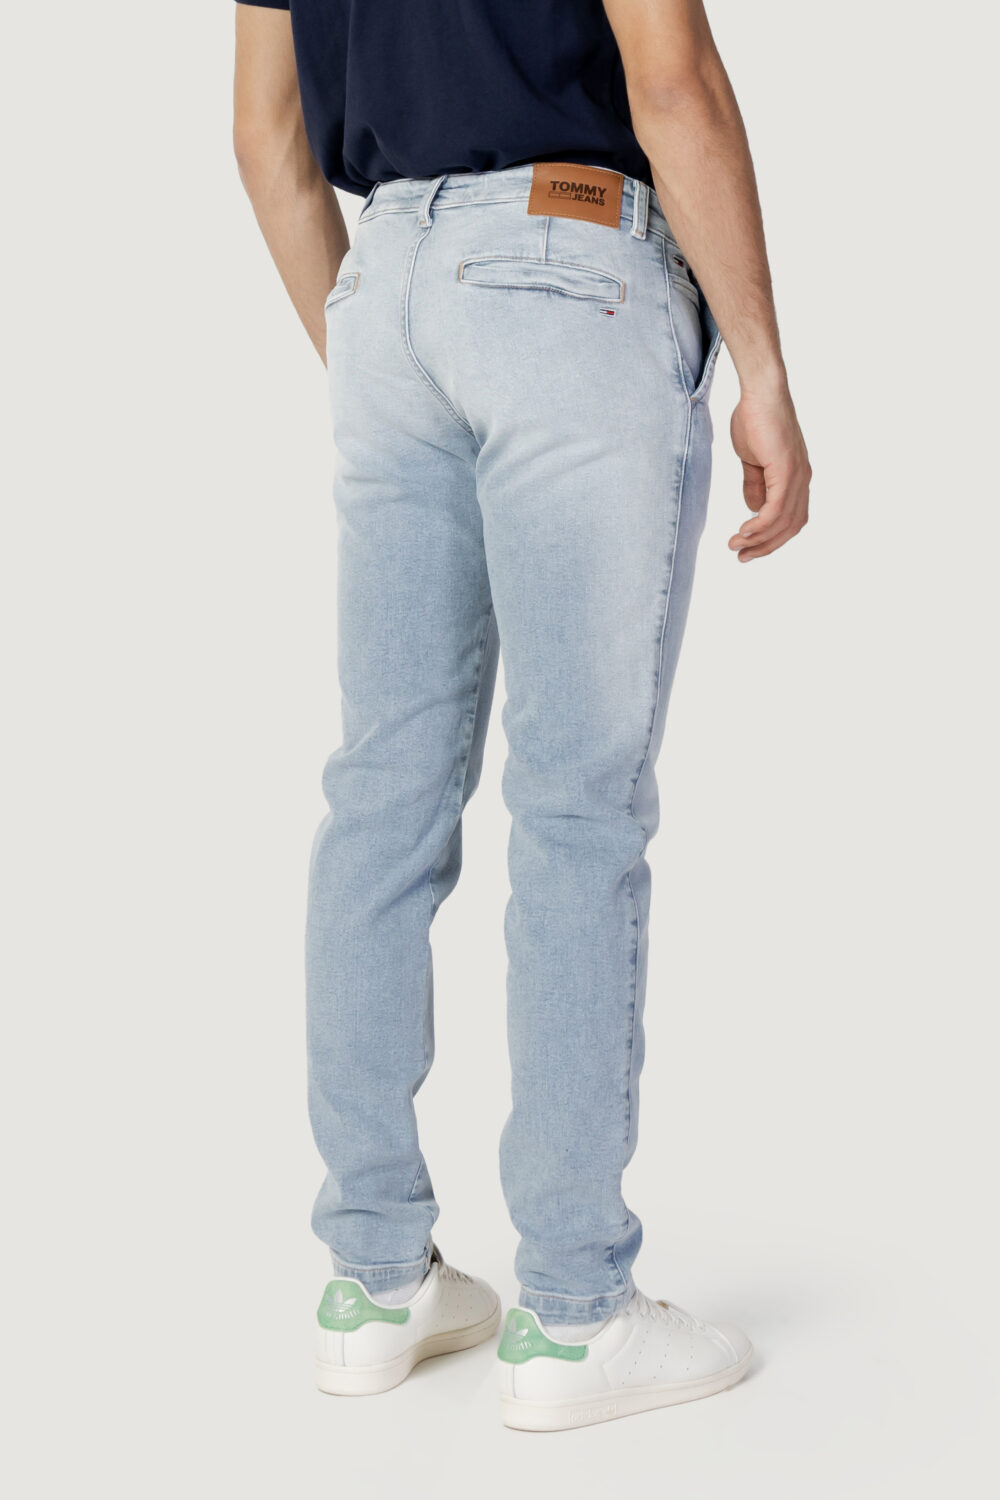 Jeans slim Tommy Hilfiger Jeans SCANTON DENIM CHINO Denim chiaro - Foto 3